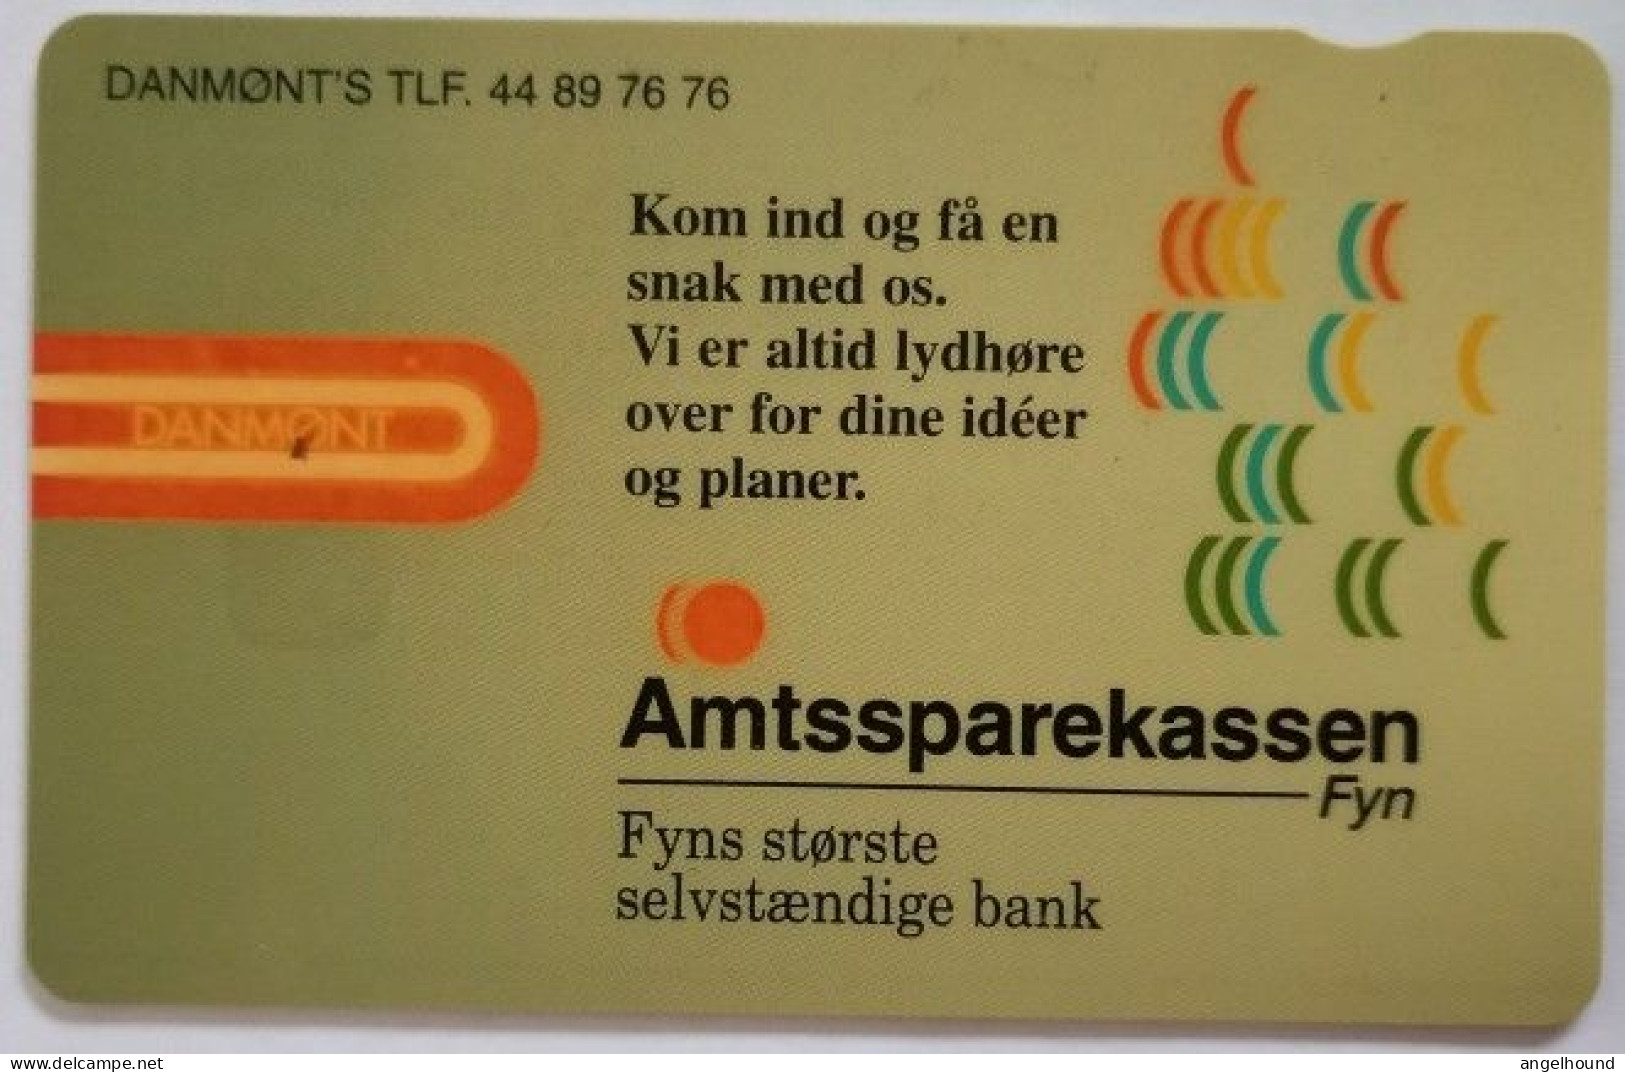 Denmark Danmont 100 Kr. - Amtssparekassen Fyn Golden Retriever - Dinamarca